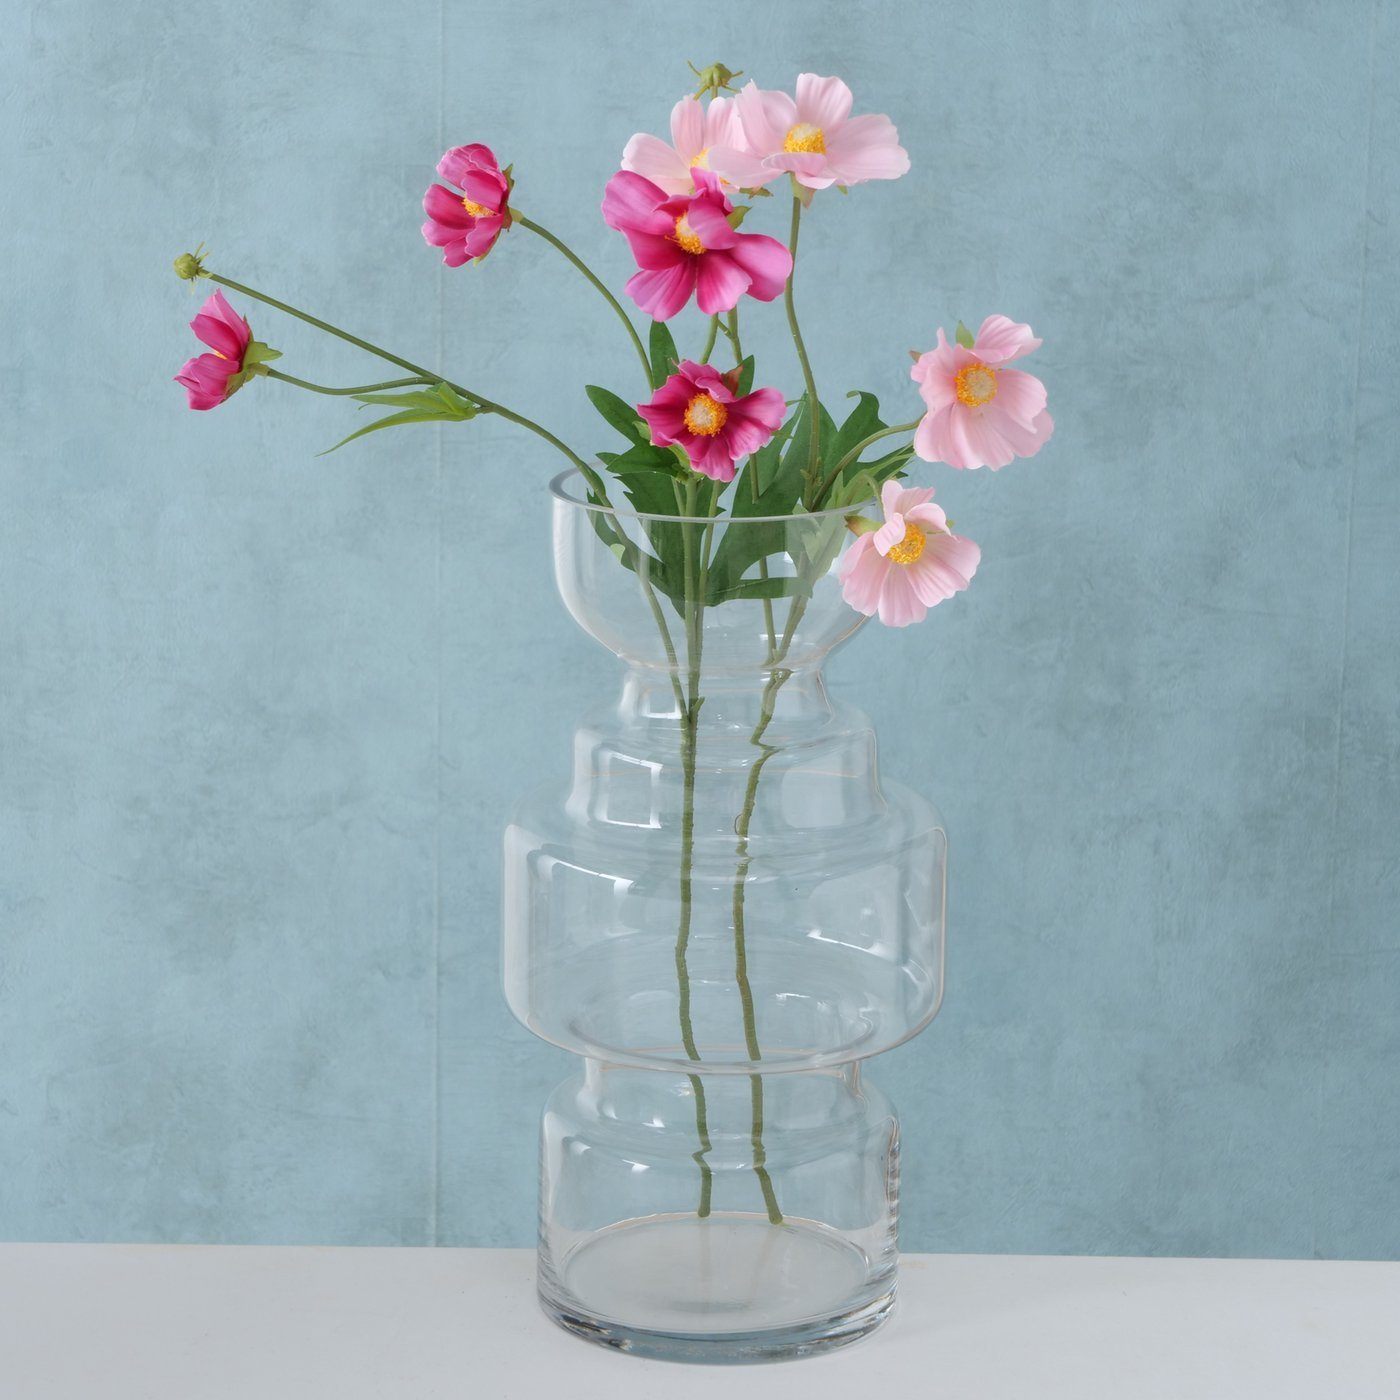 BOLTZE Dekovase "Brooke" aus Glas in transparent H.30cm, Vase Blumenvase